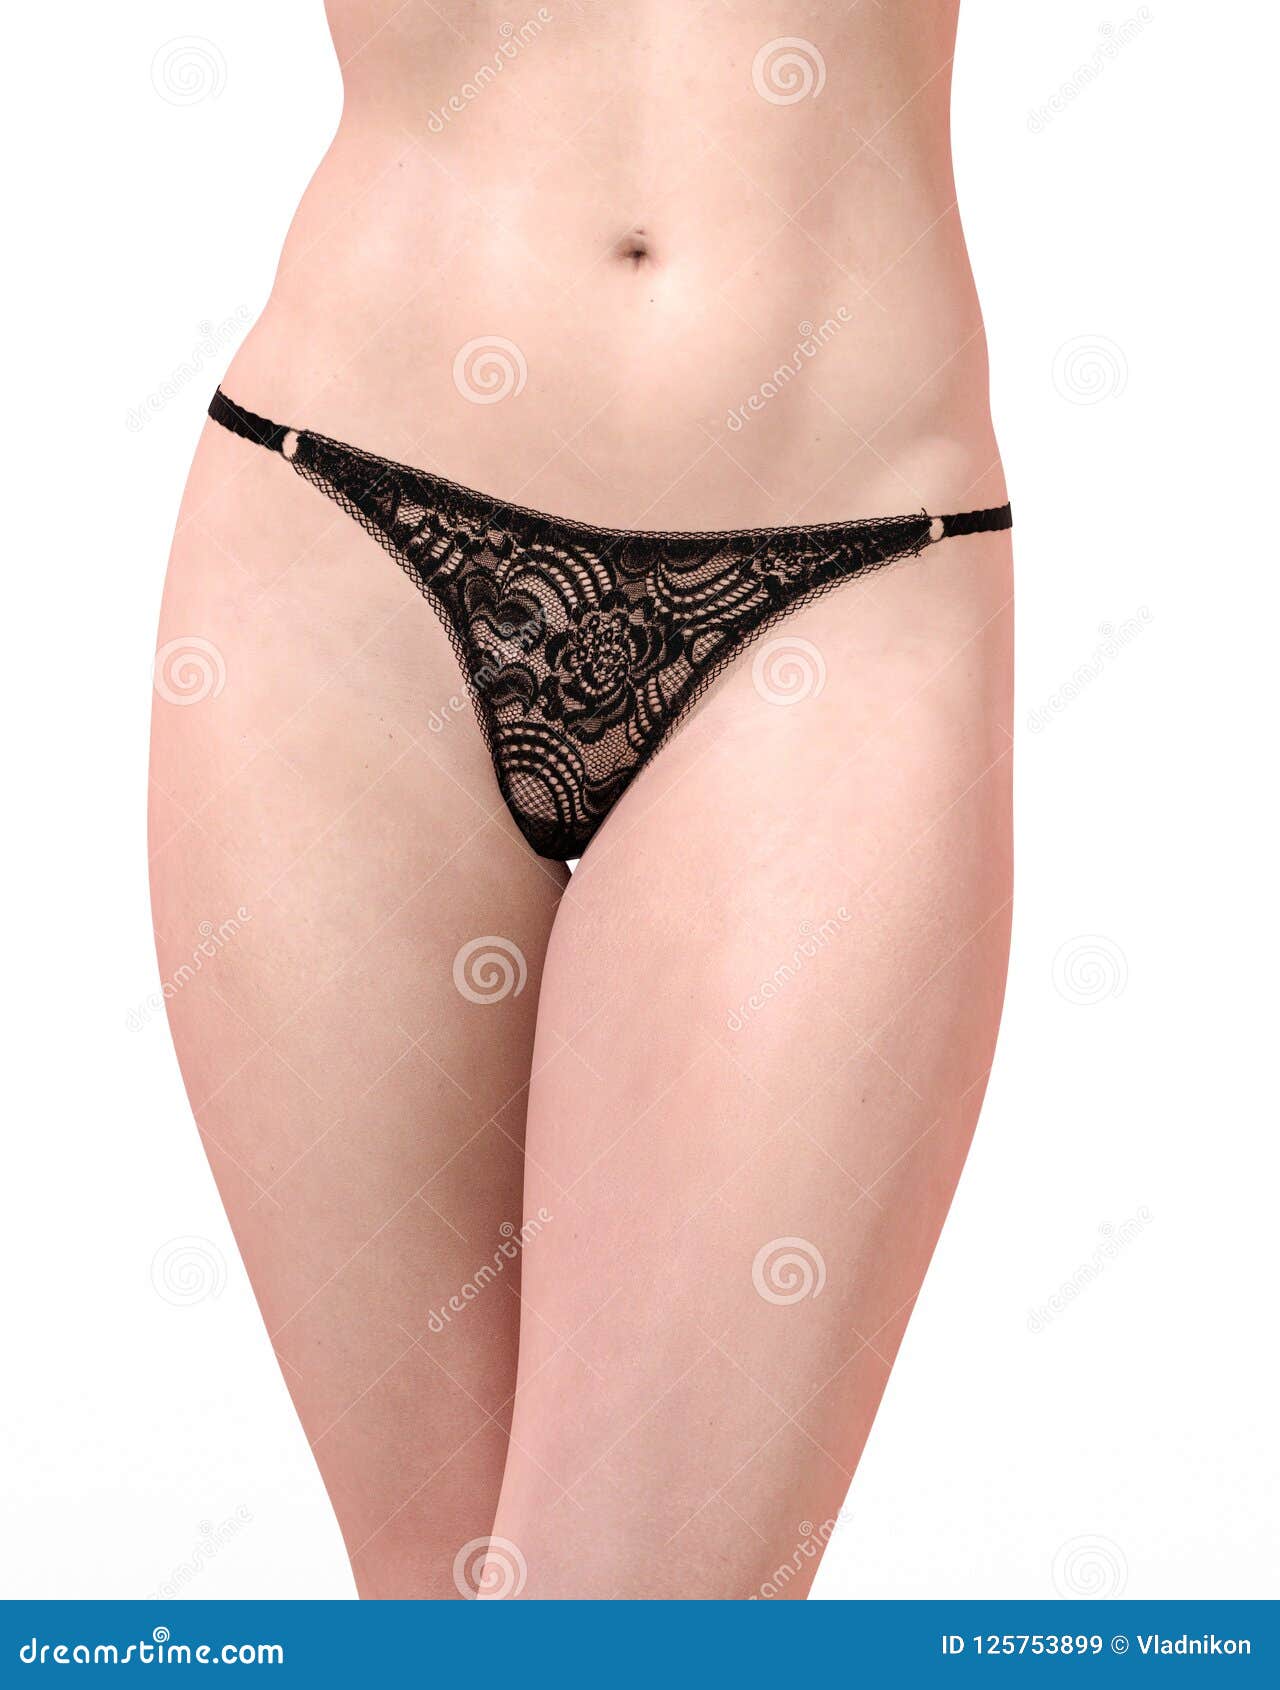 Girl in Panty. Transparent Panties Underwear Stock Illustration